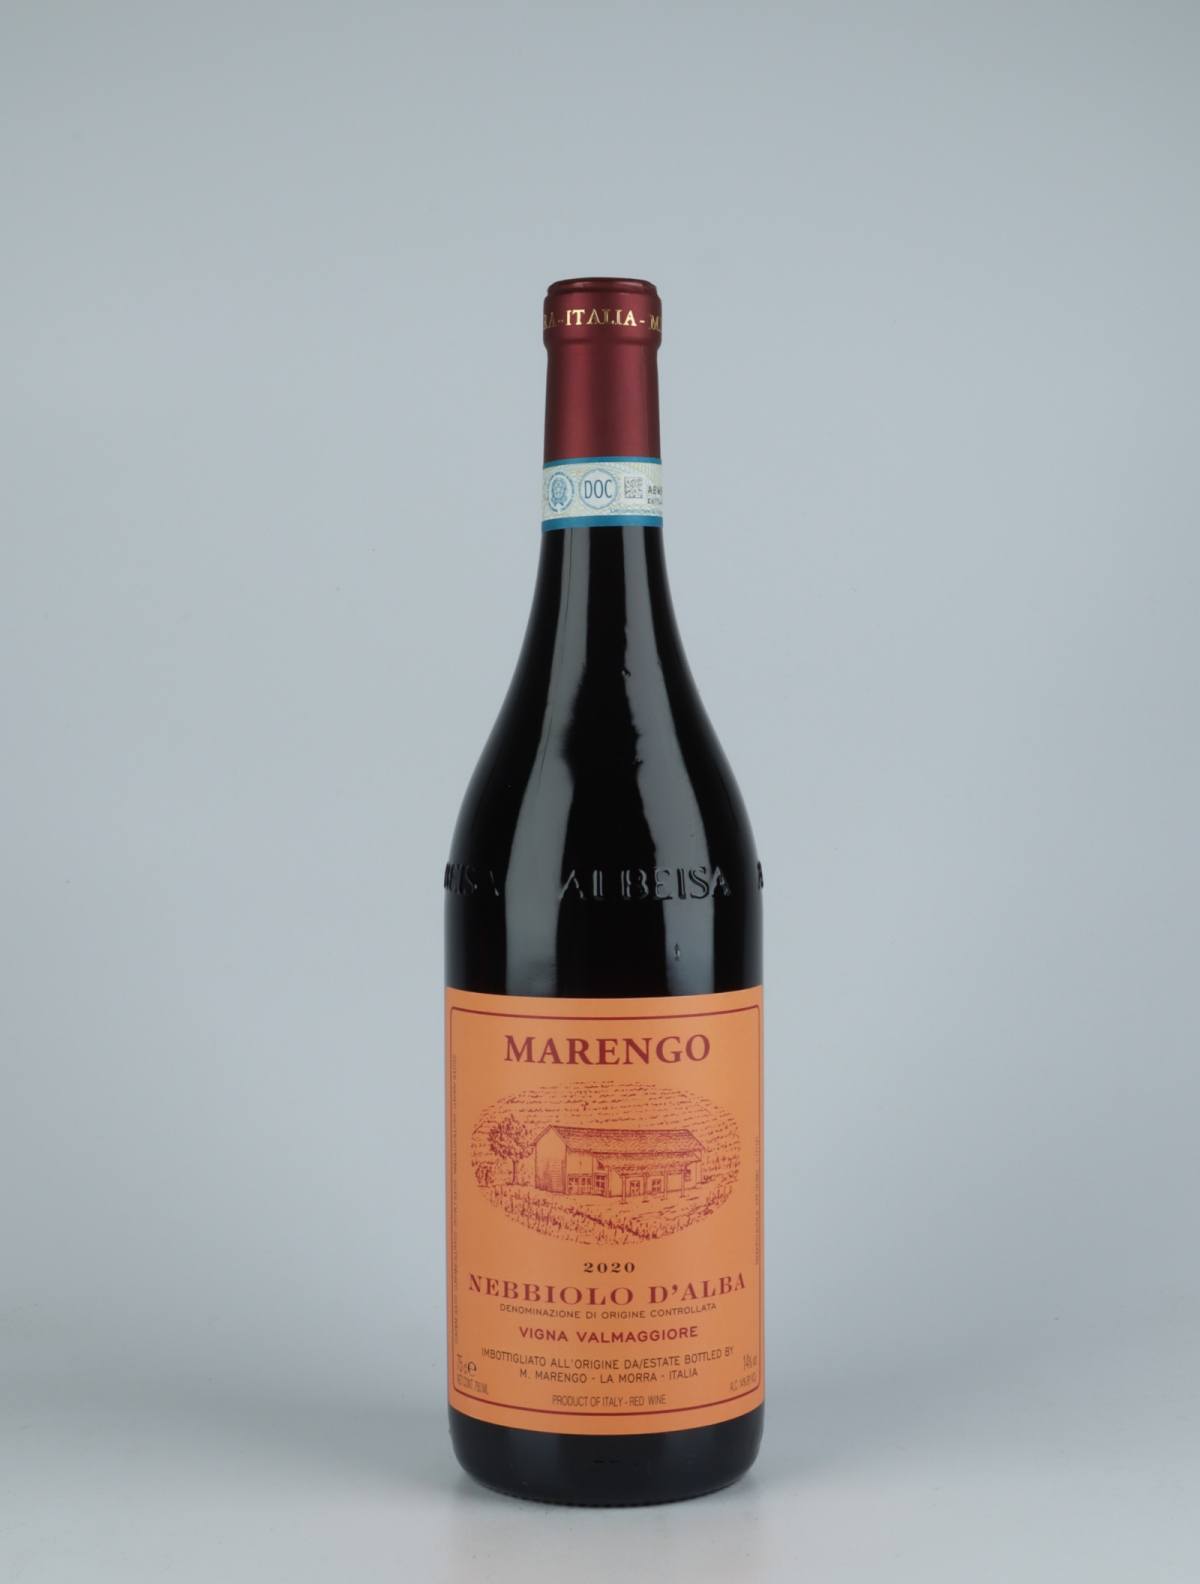 A bottle 2020 Nebbiolo d'Alba - Valmaggiore Red wine from Mario Marengo, Piedmont in Italy